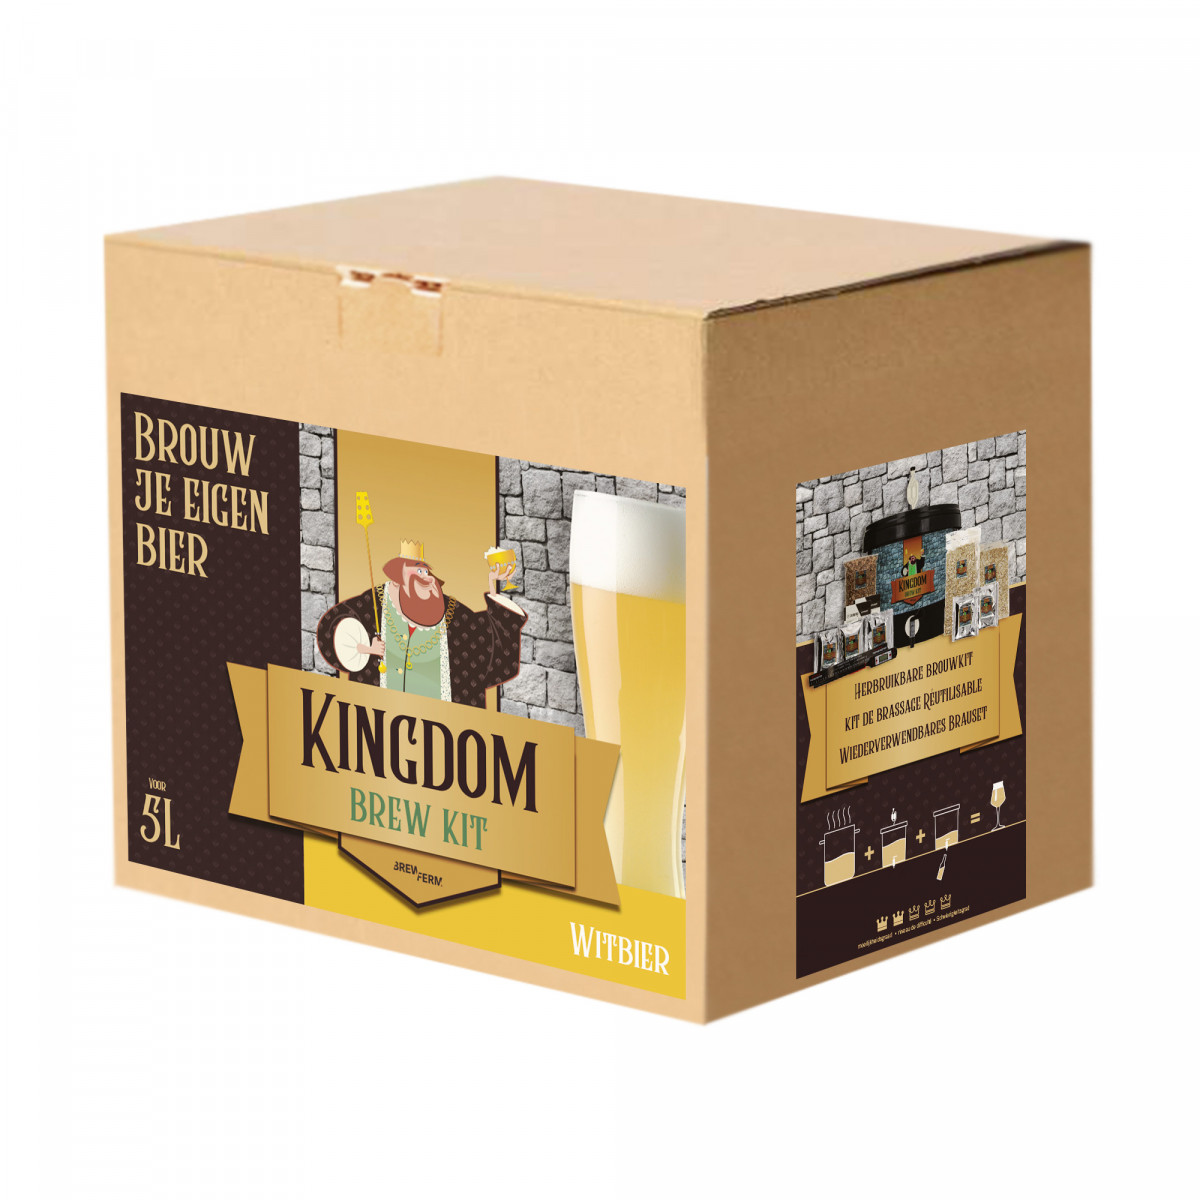 Kingdom Brew Kit - Bière blanche